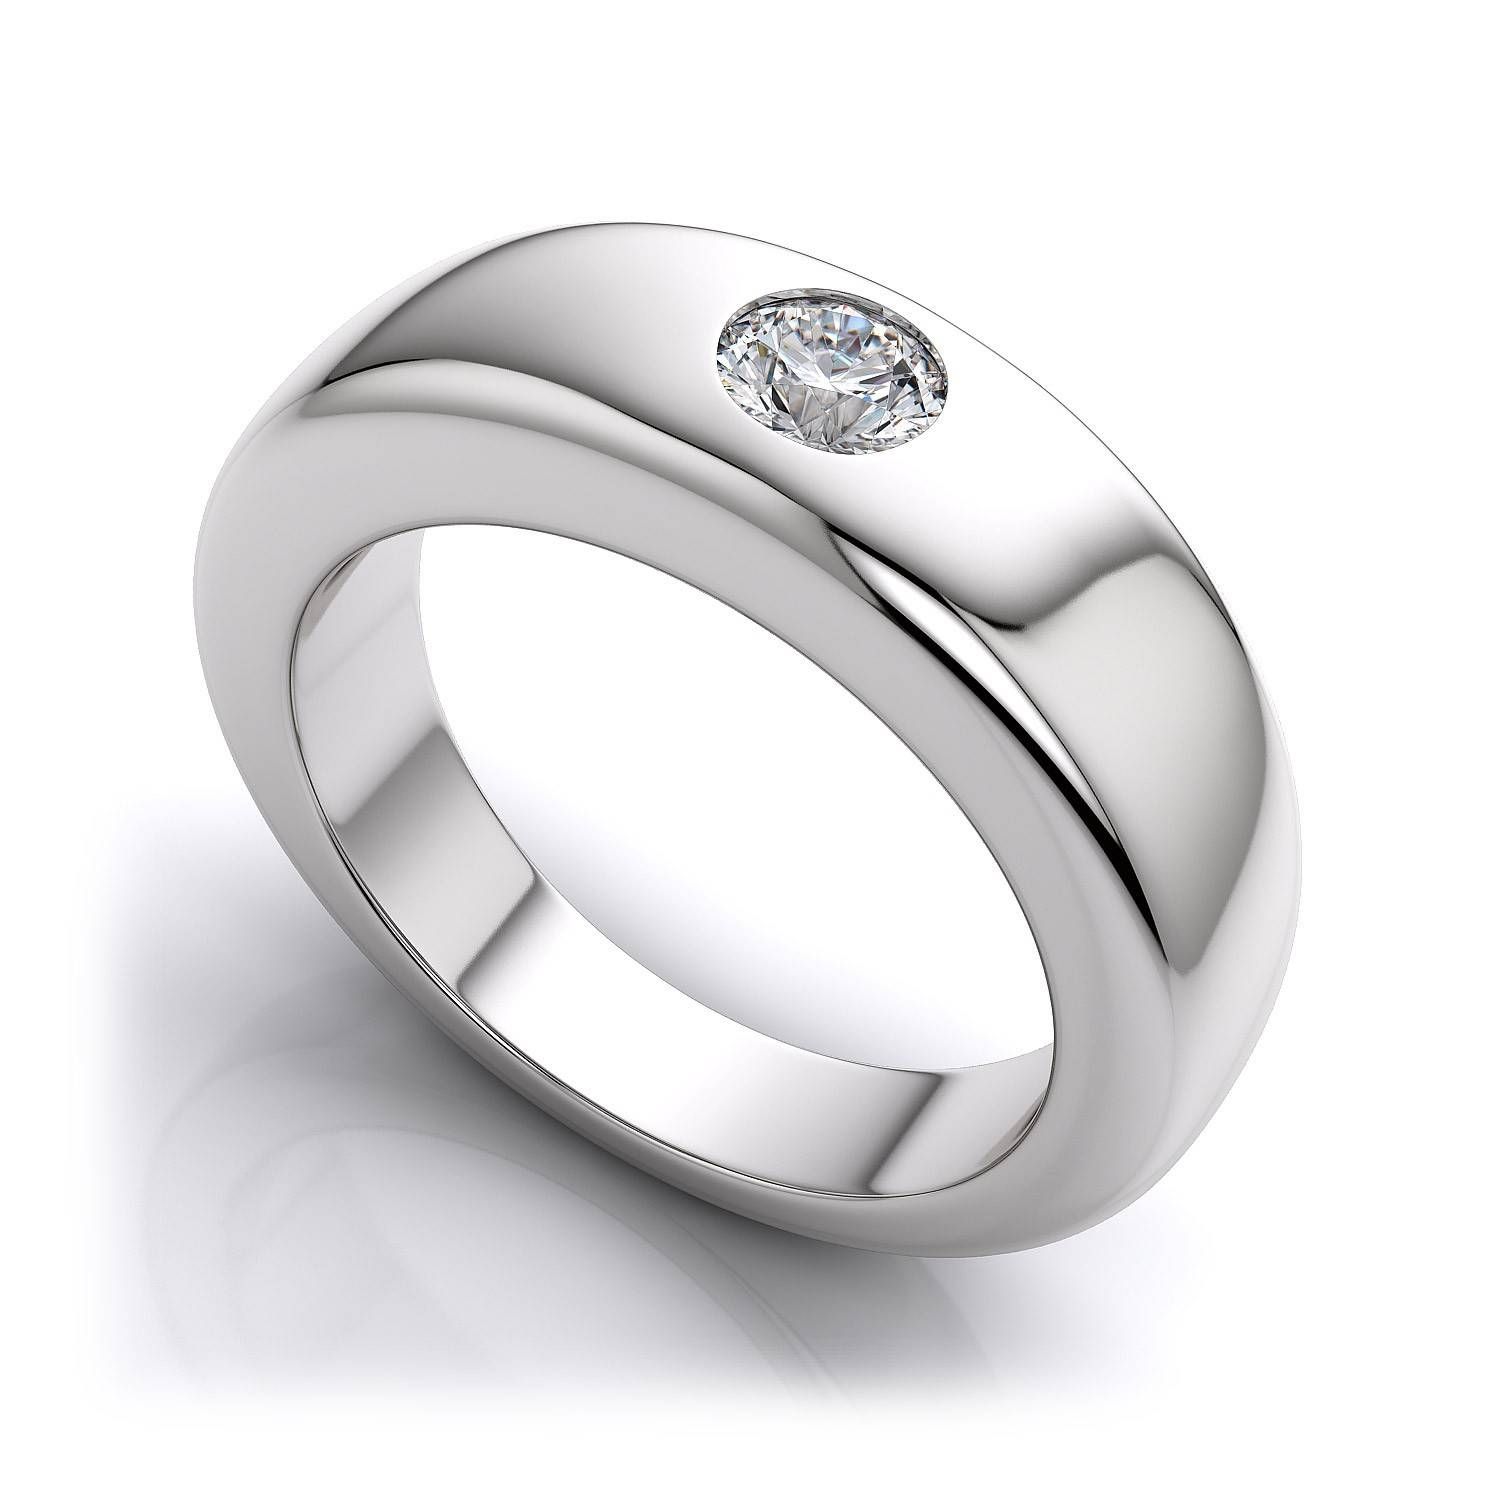 Cheap platinum wedding rings